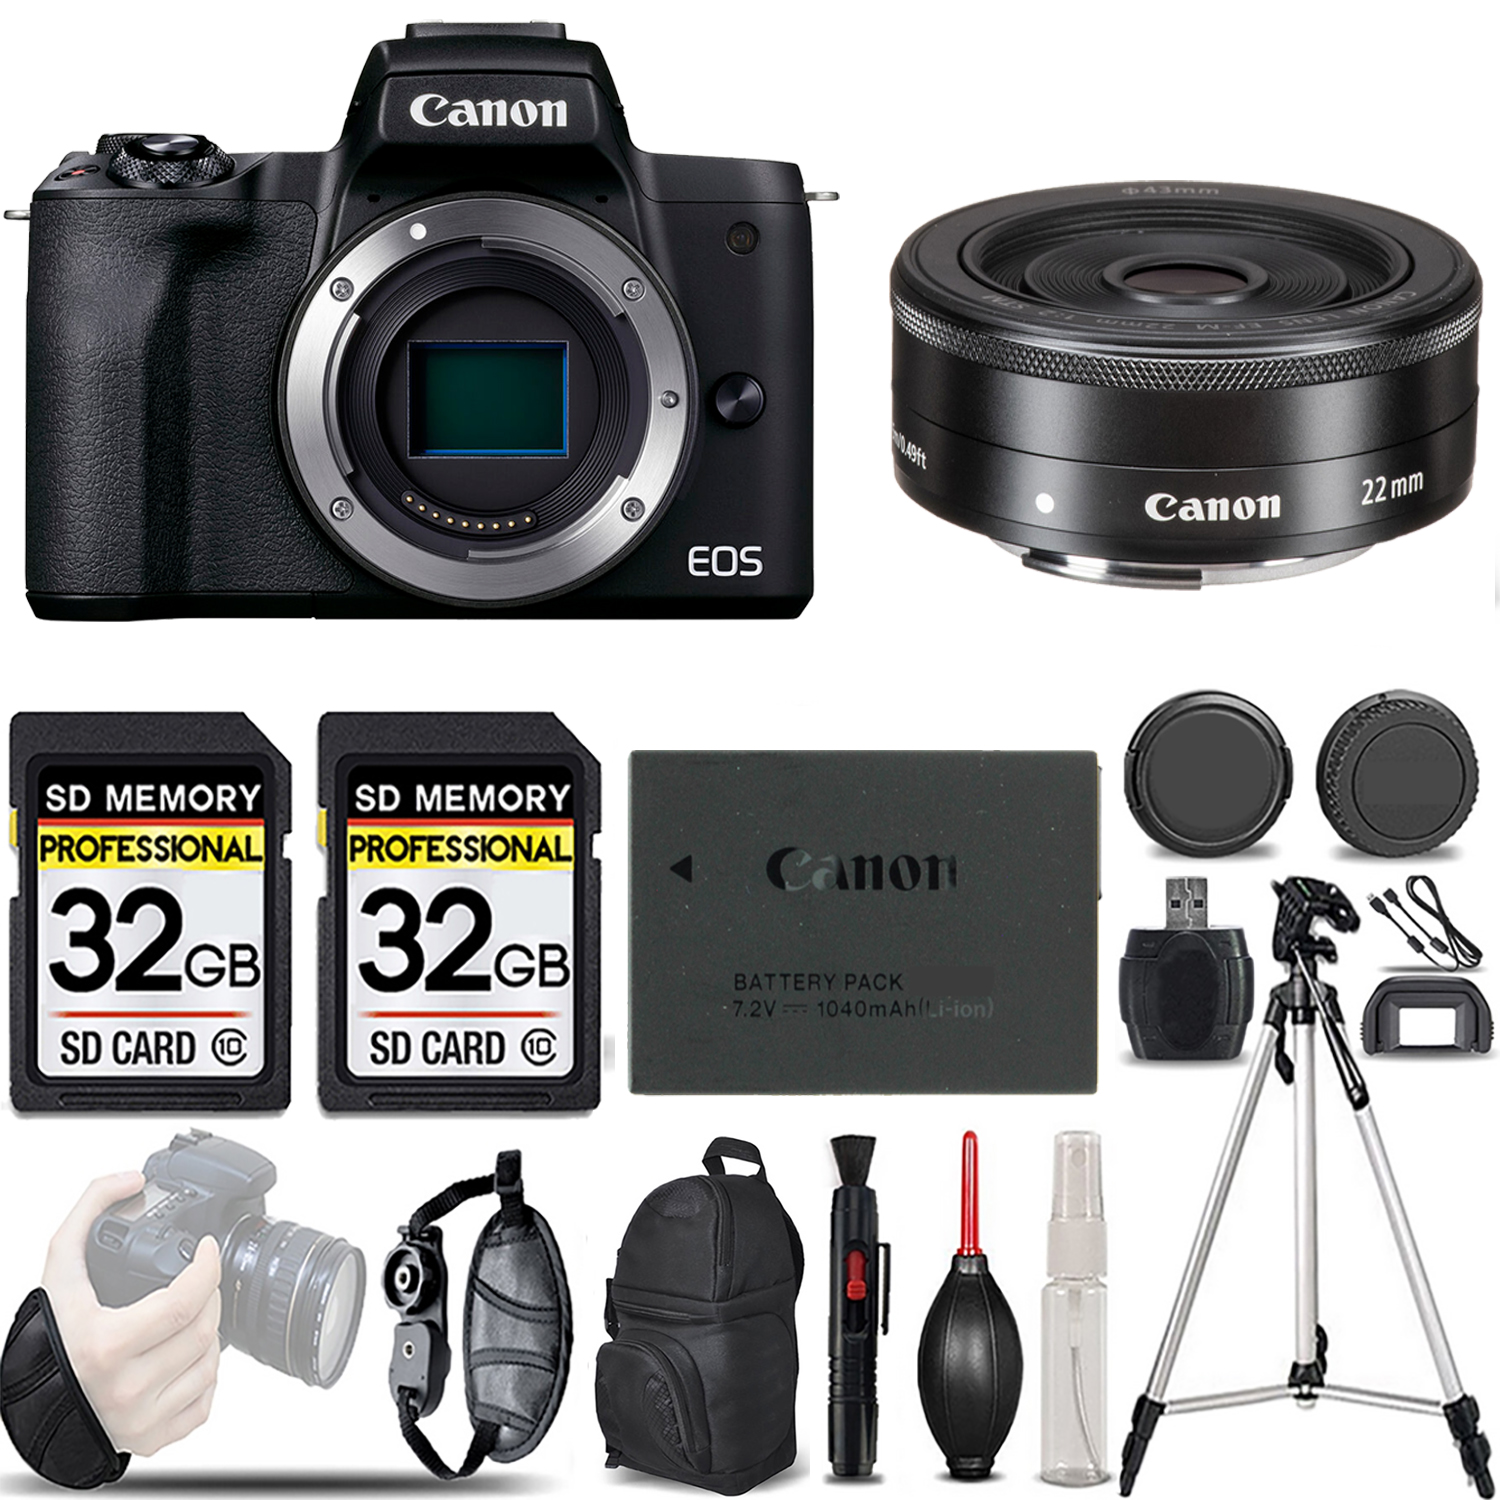 EOS EOS M50 Mark II Camera (Black) + 22mm f/2 STM Lens - LOADED KIT *FREE SHIPPING*